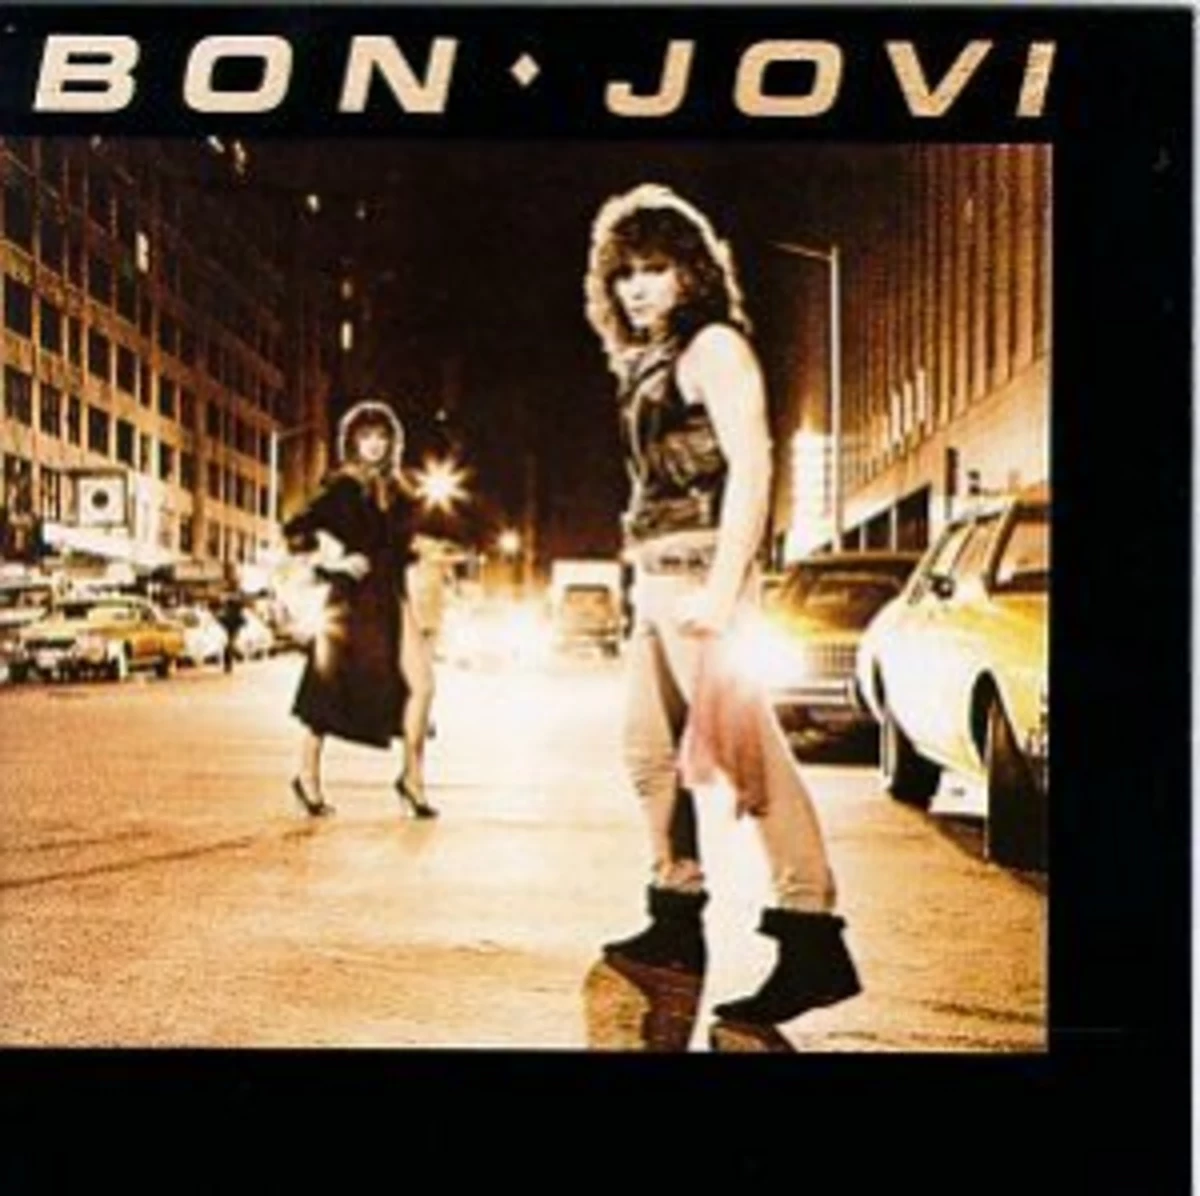 WPDH Album of the Week Bon Jovi 'Bon Jovi'